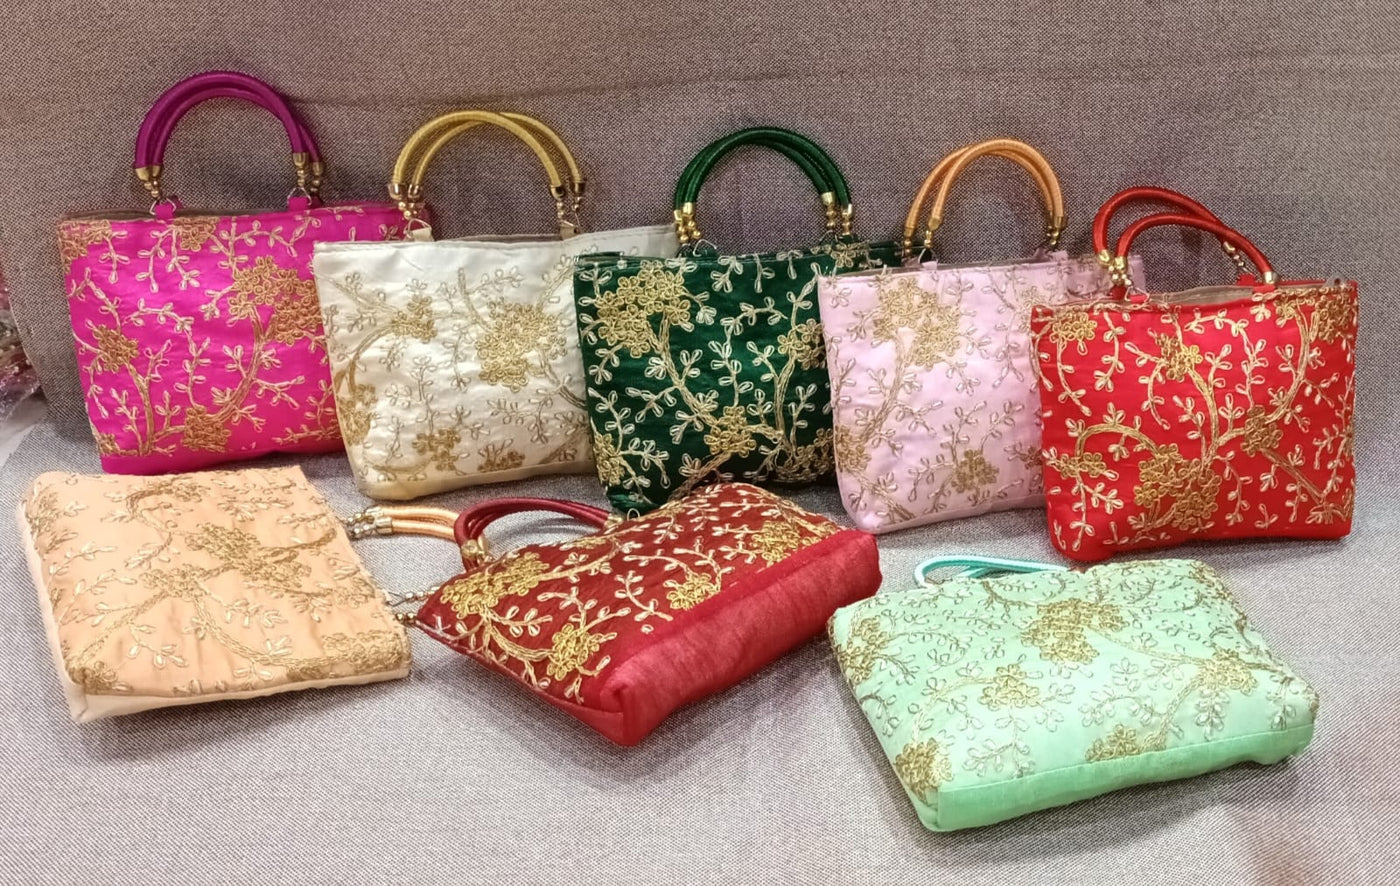 Buy Latest ledies purse design at Amazon.in